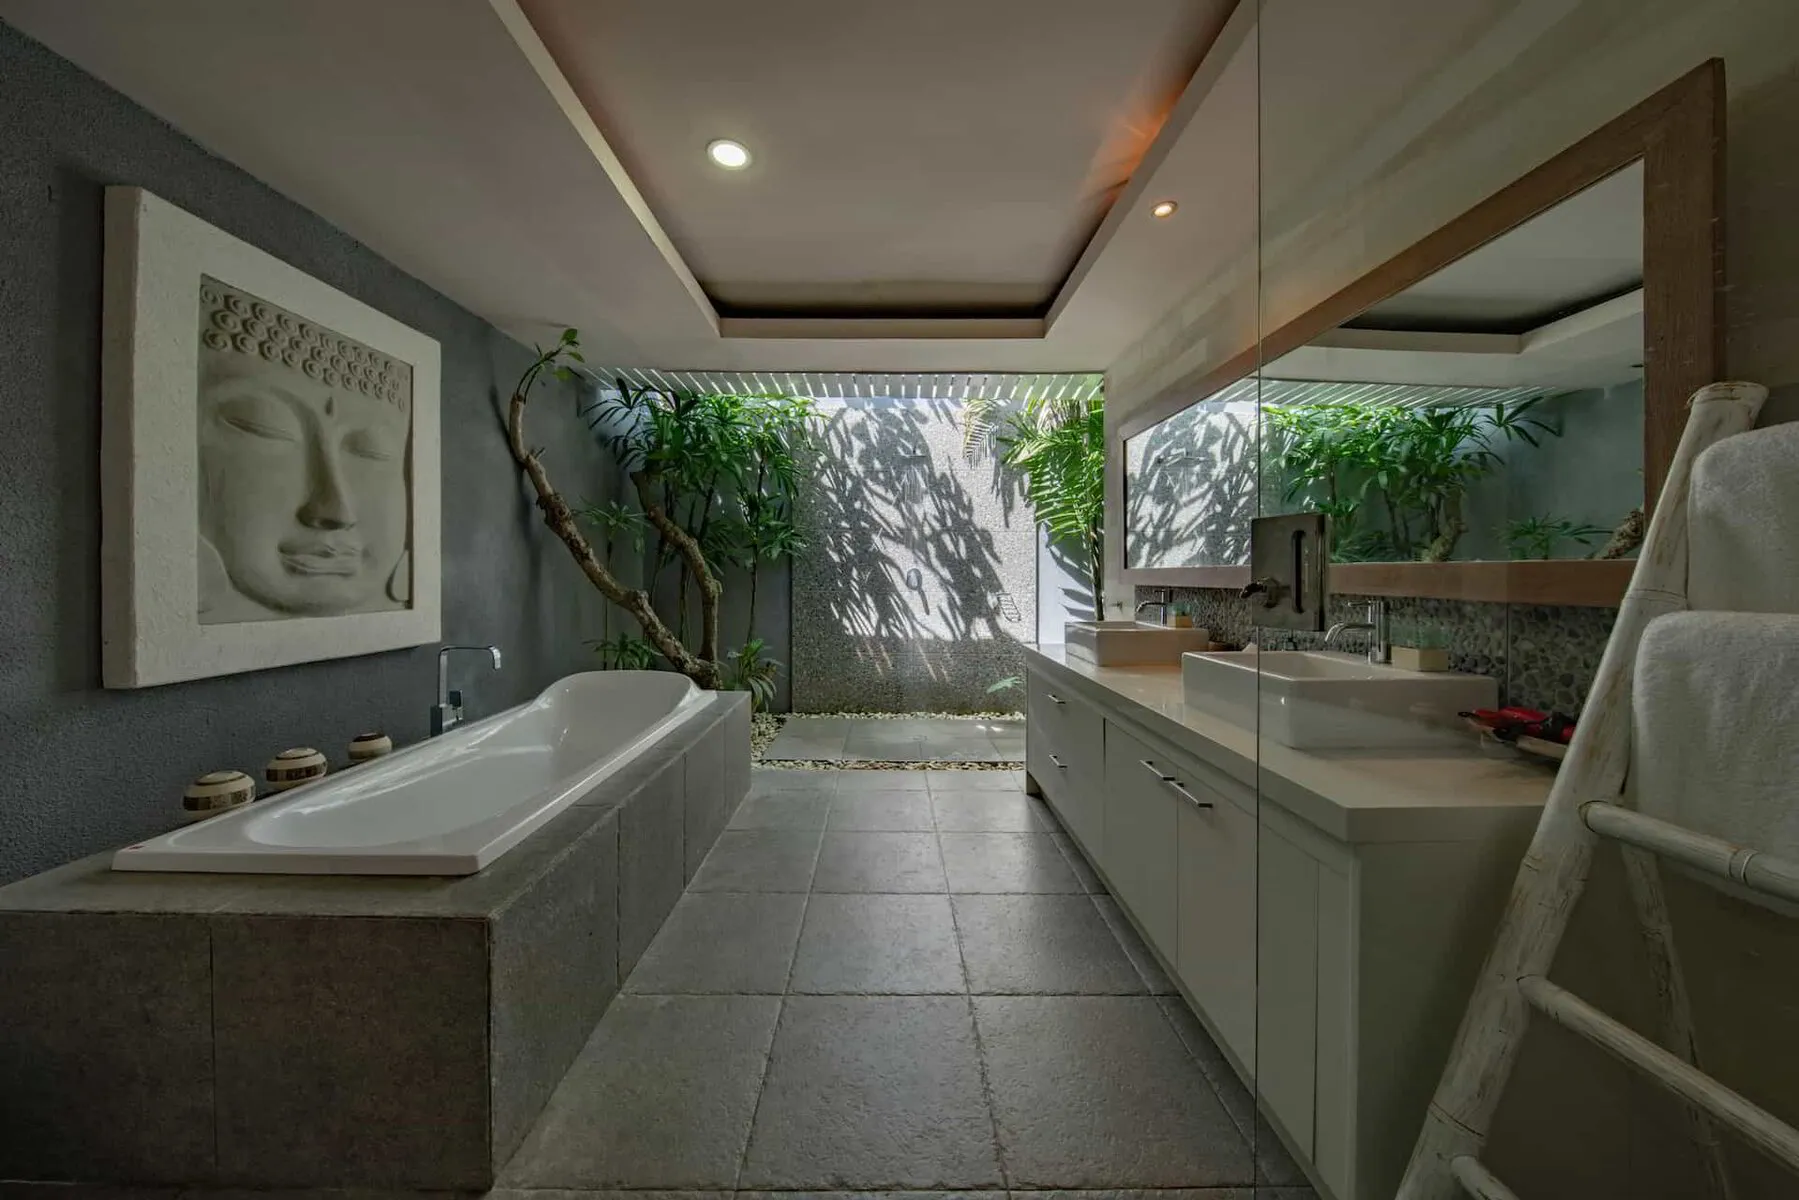 modern bathroom with plants